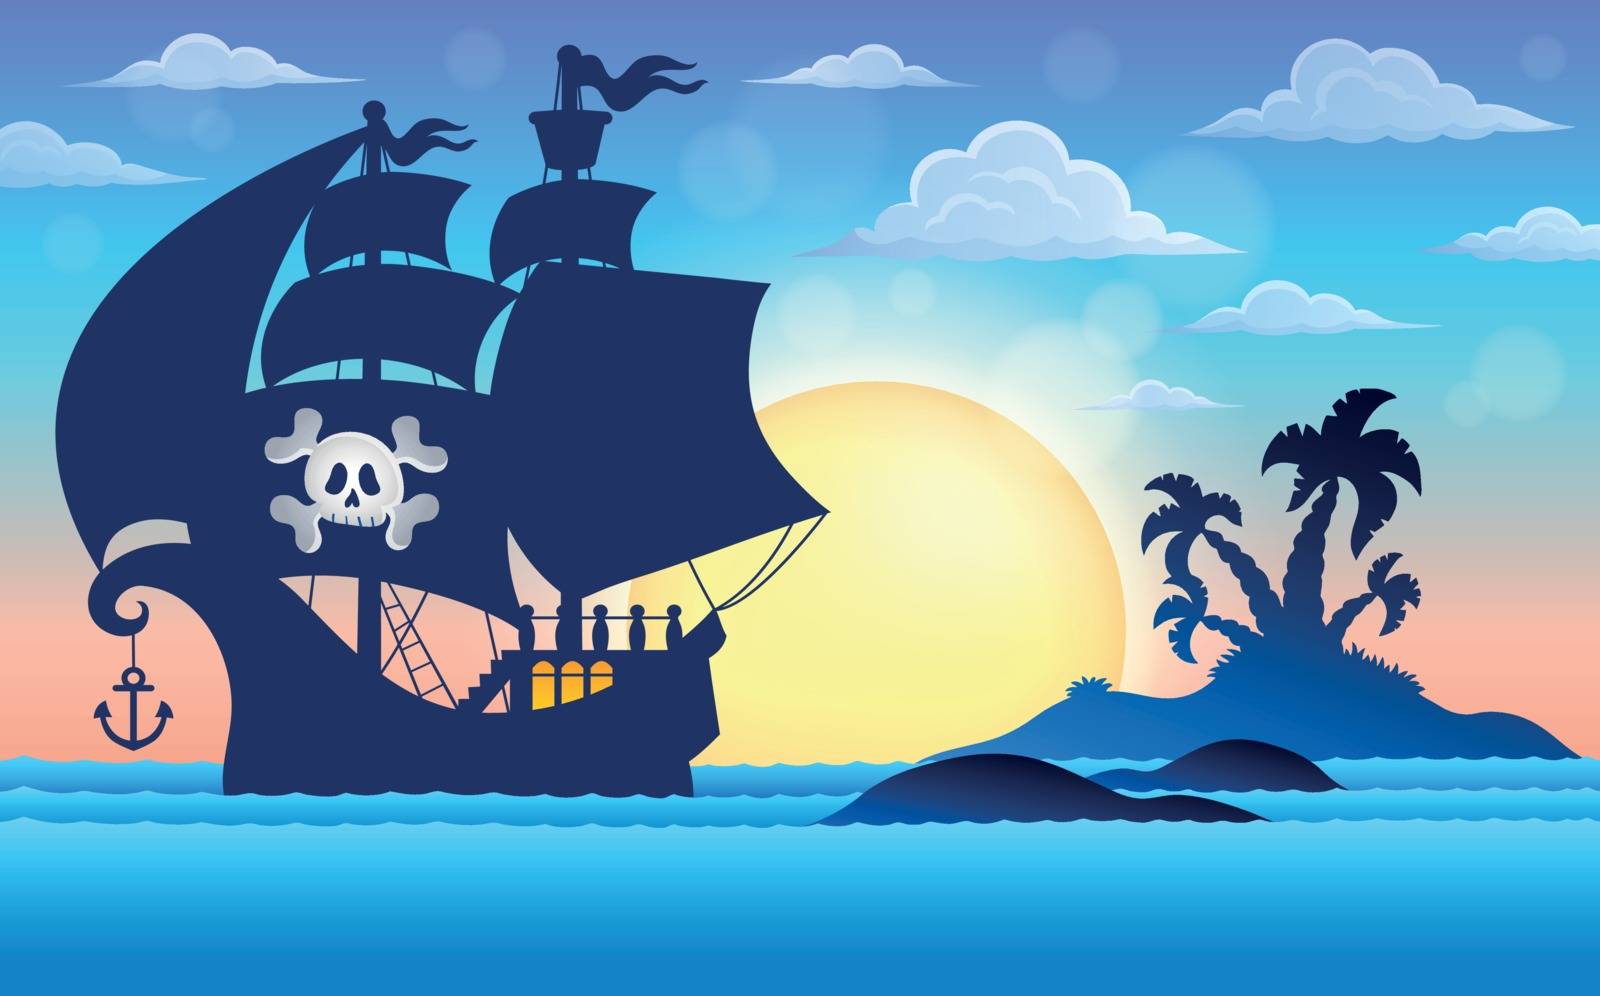 Pirate vessel silhouette theme 5 - eps10 vector illustration.